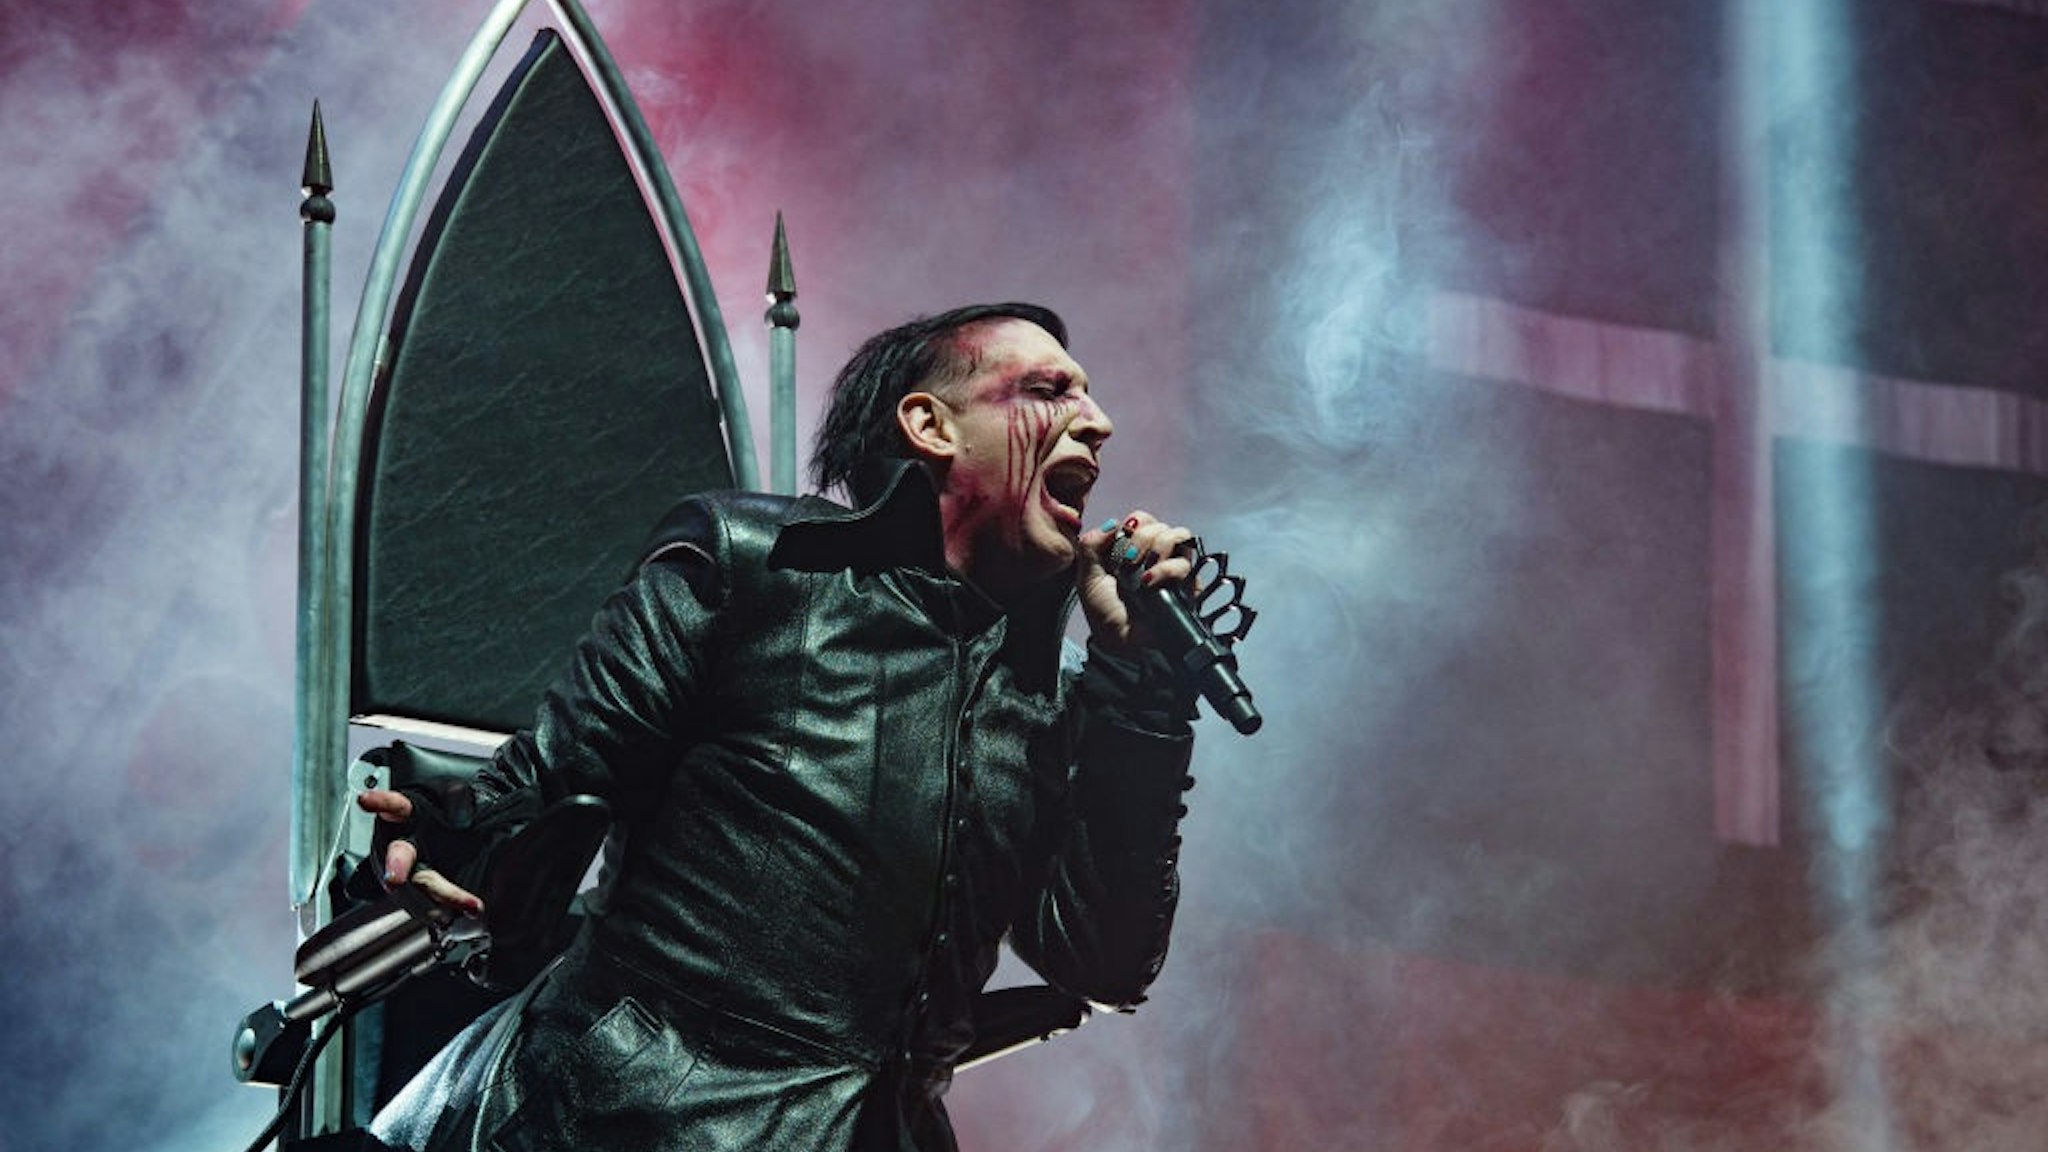 PARIS, FRANCE - NOVEMBER 27: Marilyn Manson performs at AccorHotels Arena on November 27, 2017 in Paris, France.